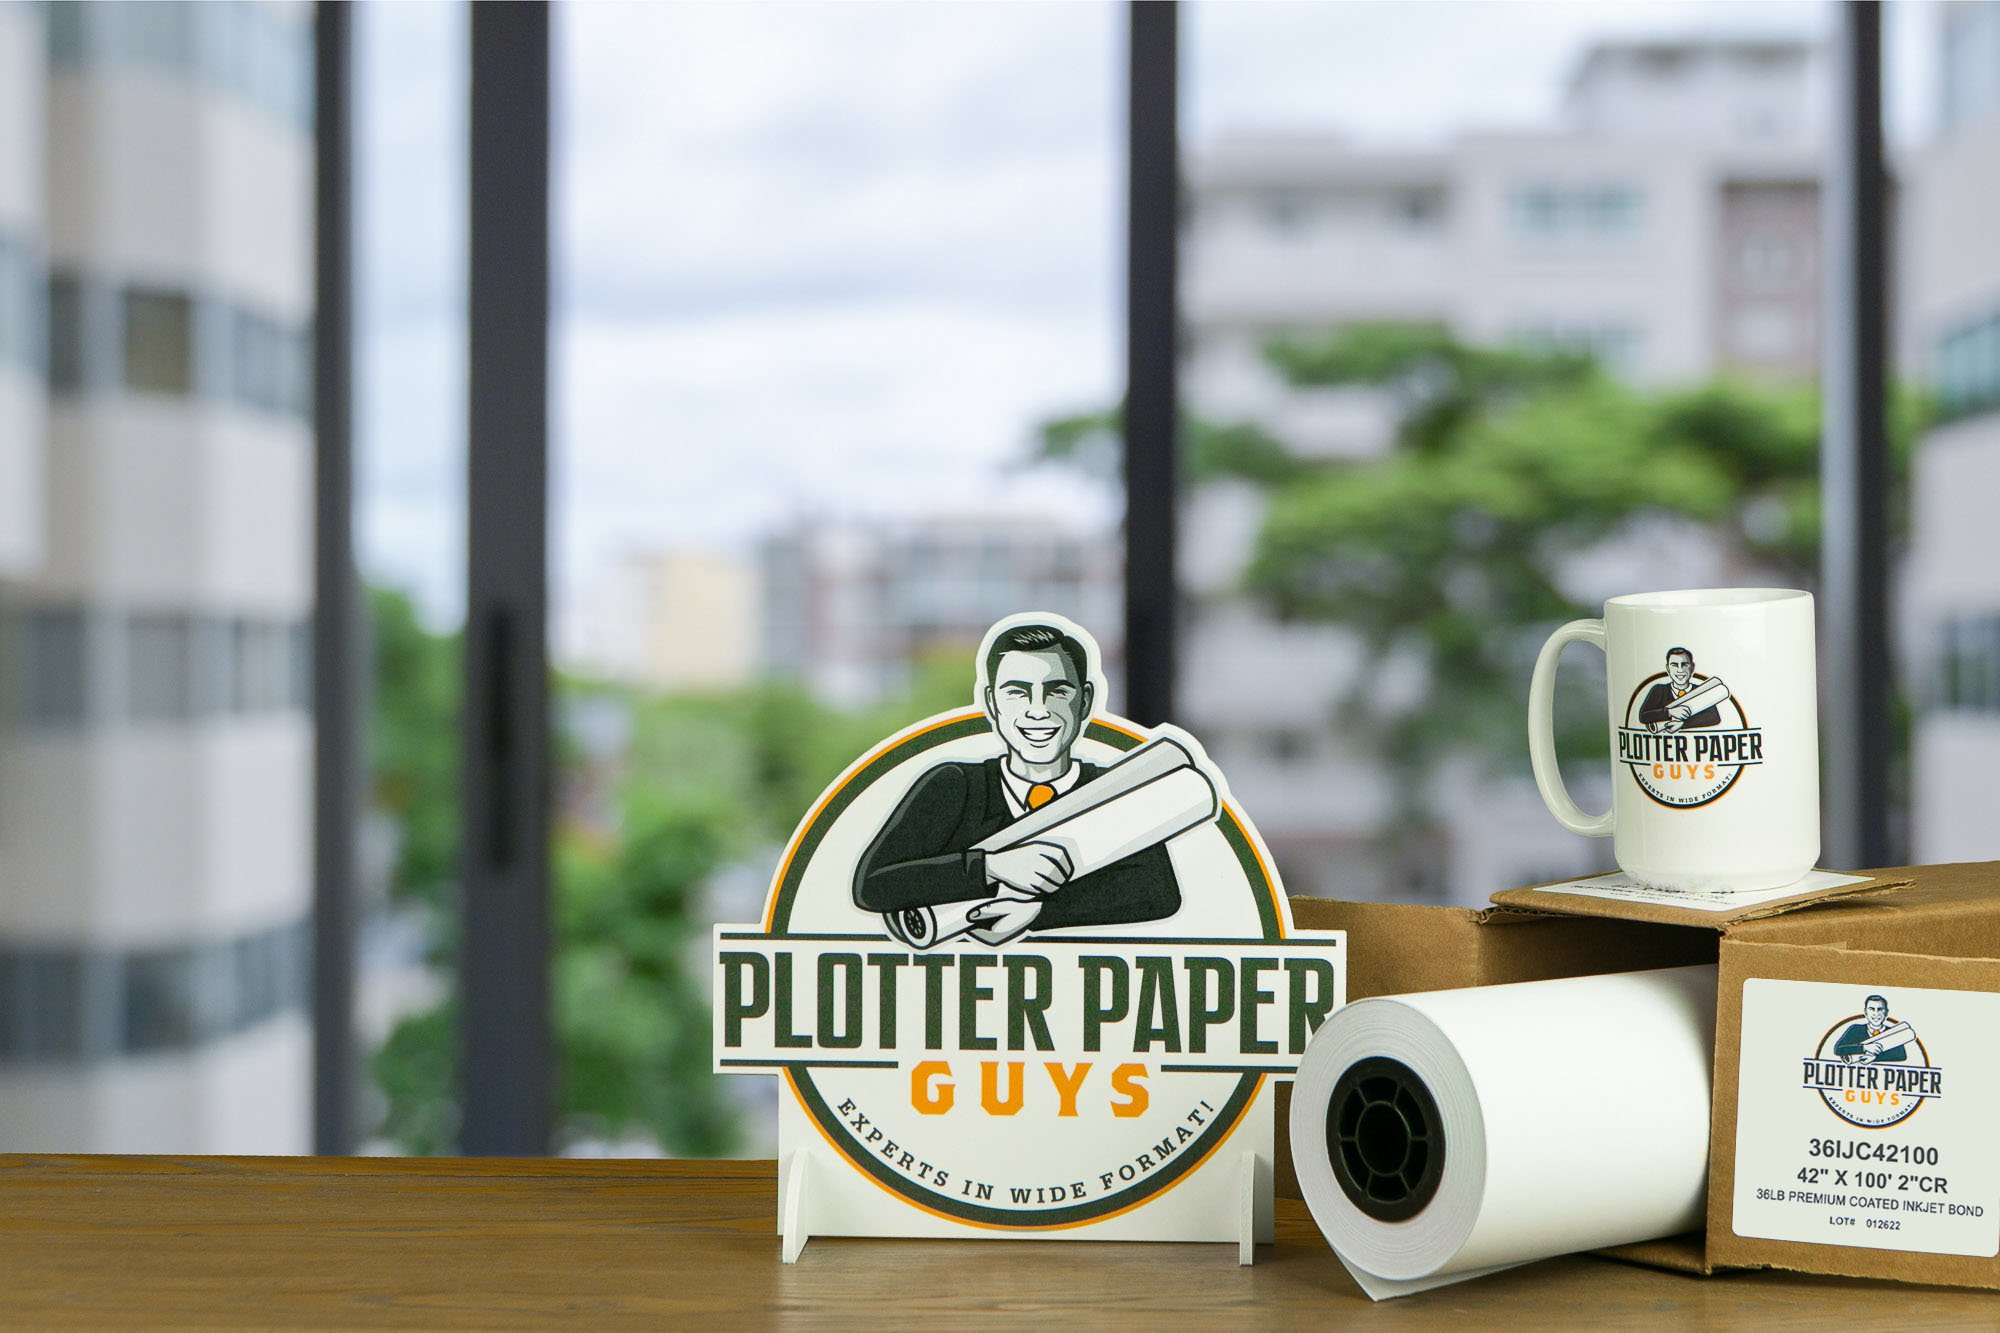 36 lb 1 Roll Premium Coated Bond Plotter Paper 42 x 100 2 Core 